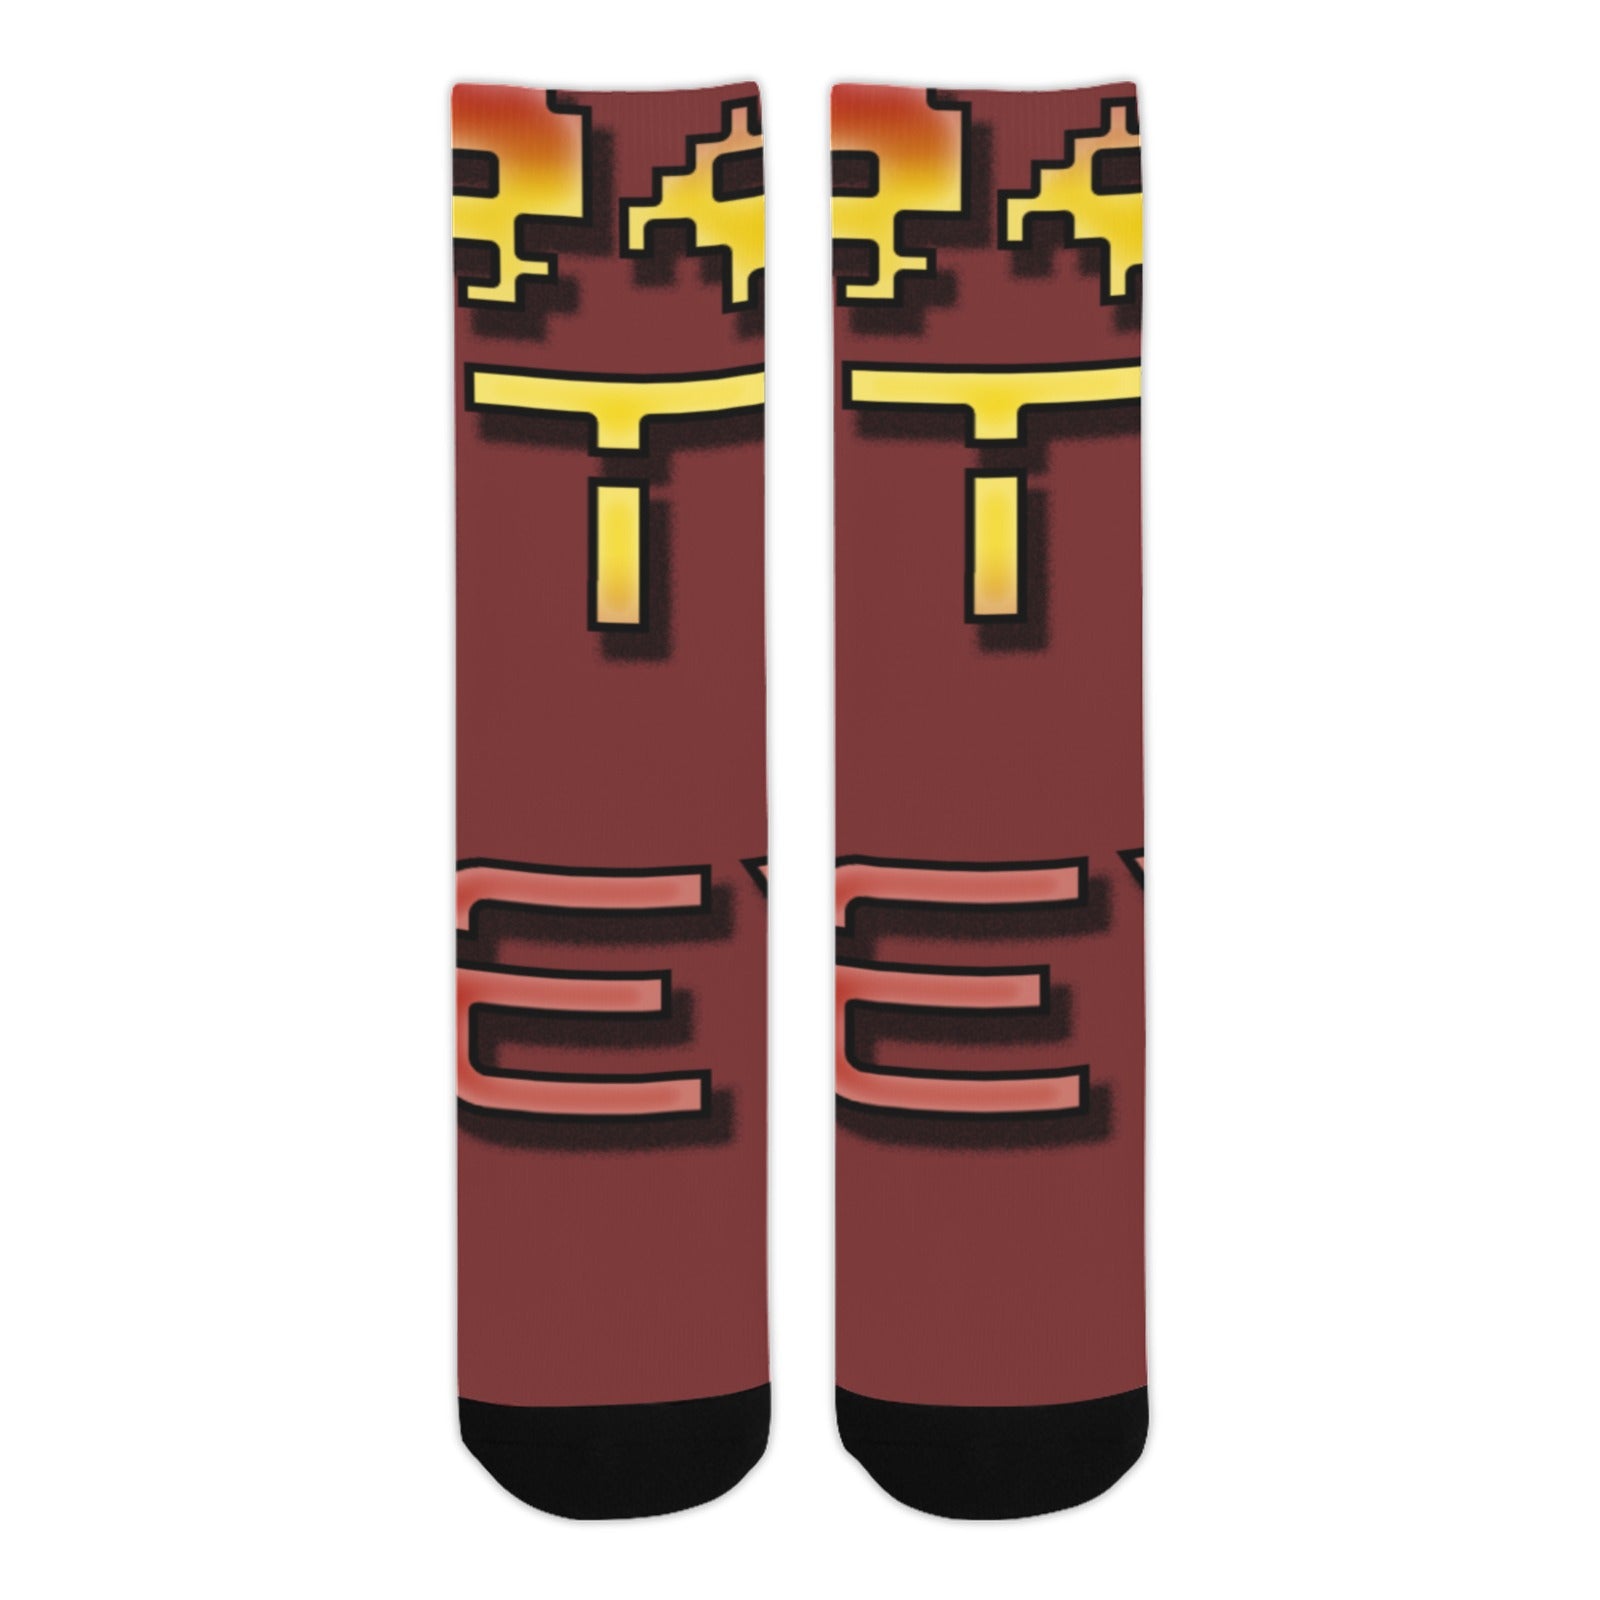 fz unisex socks - red one size / fz socks - burgundy sublimated crew socks(made in usa)